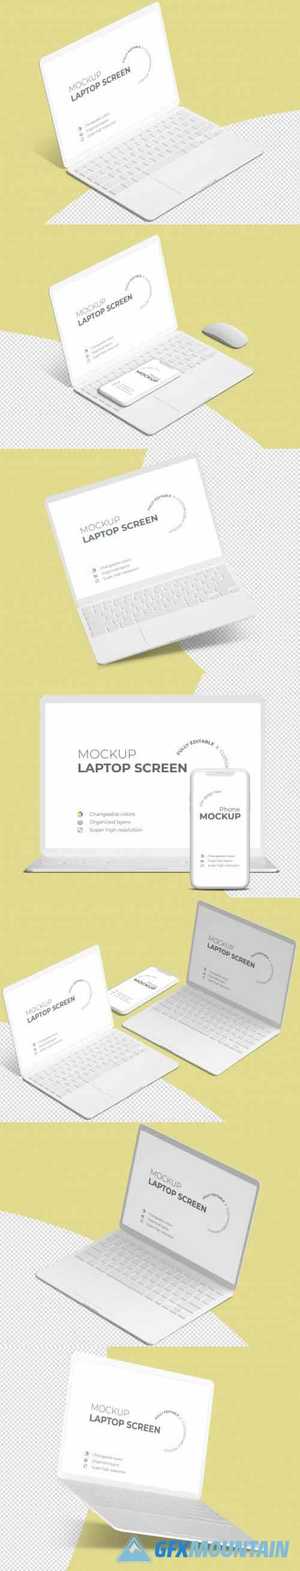 Minimalistic laptop screen and phone mockup